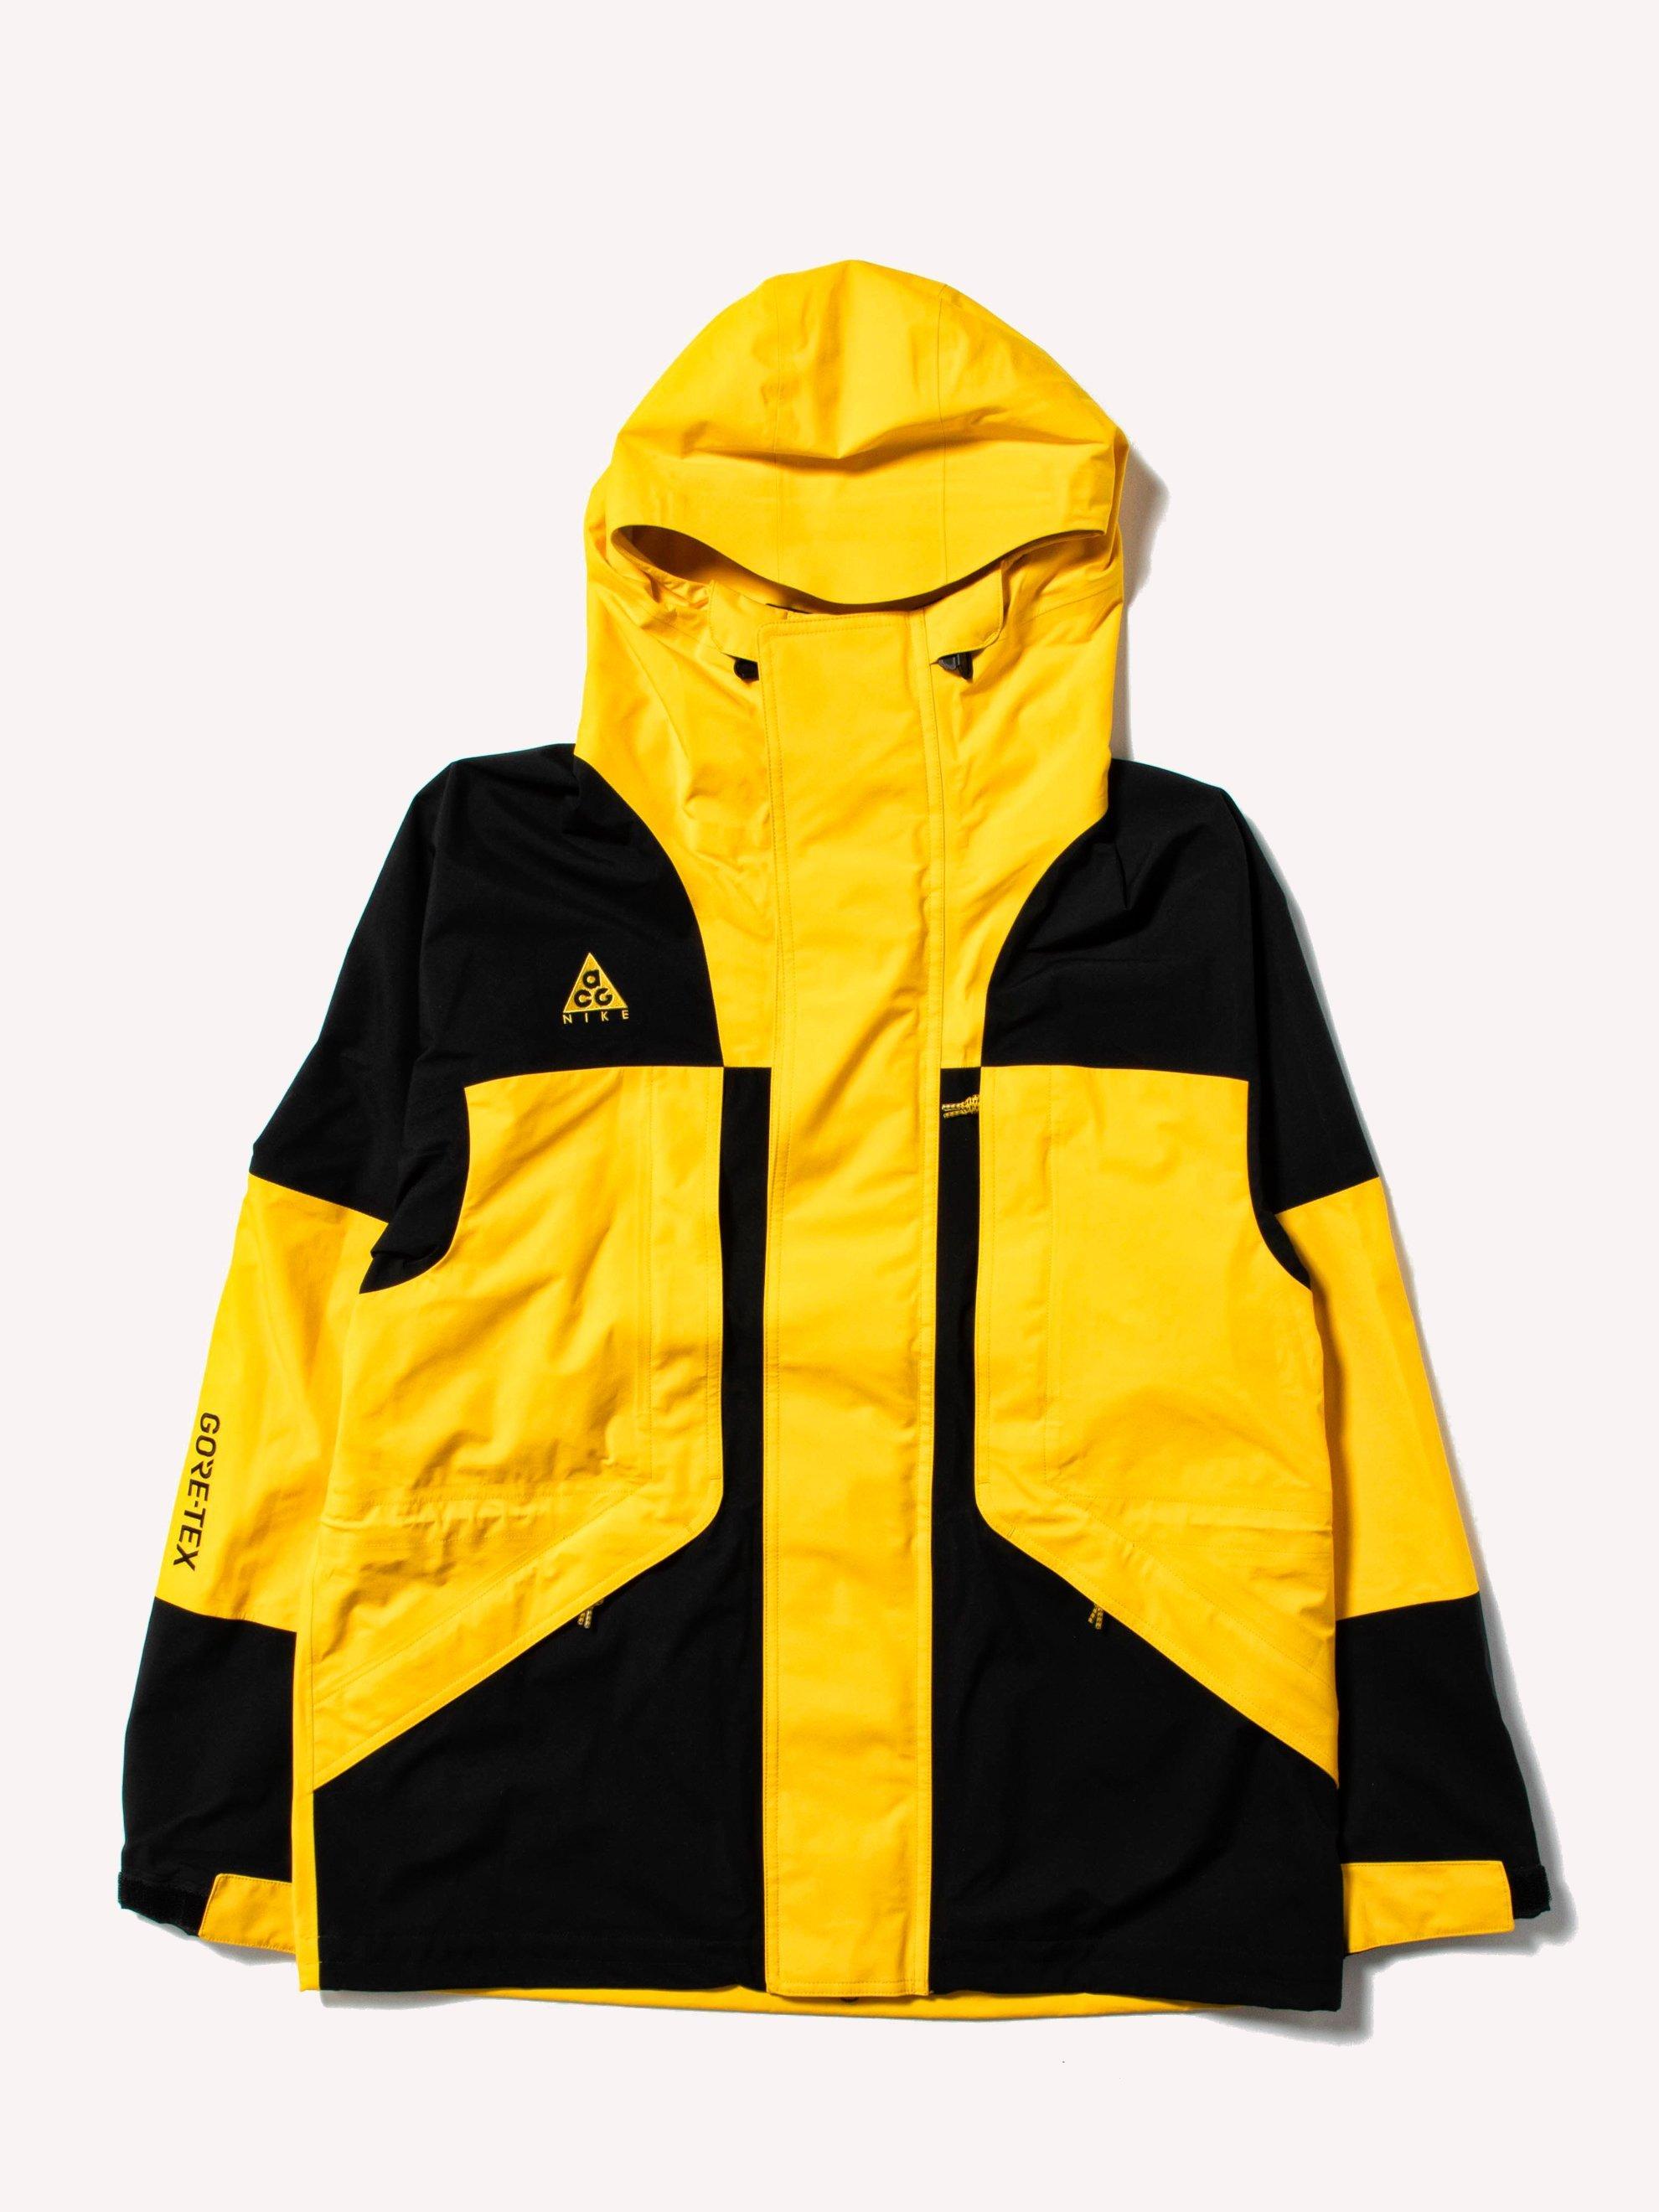 yellow and black nike jacket